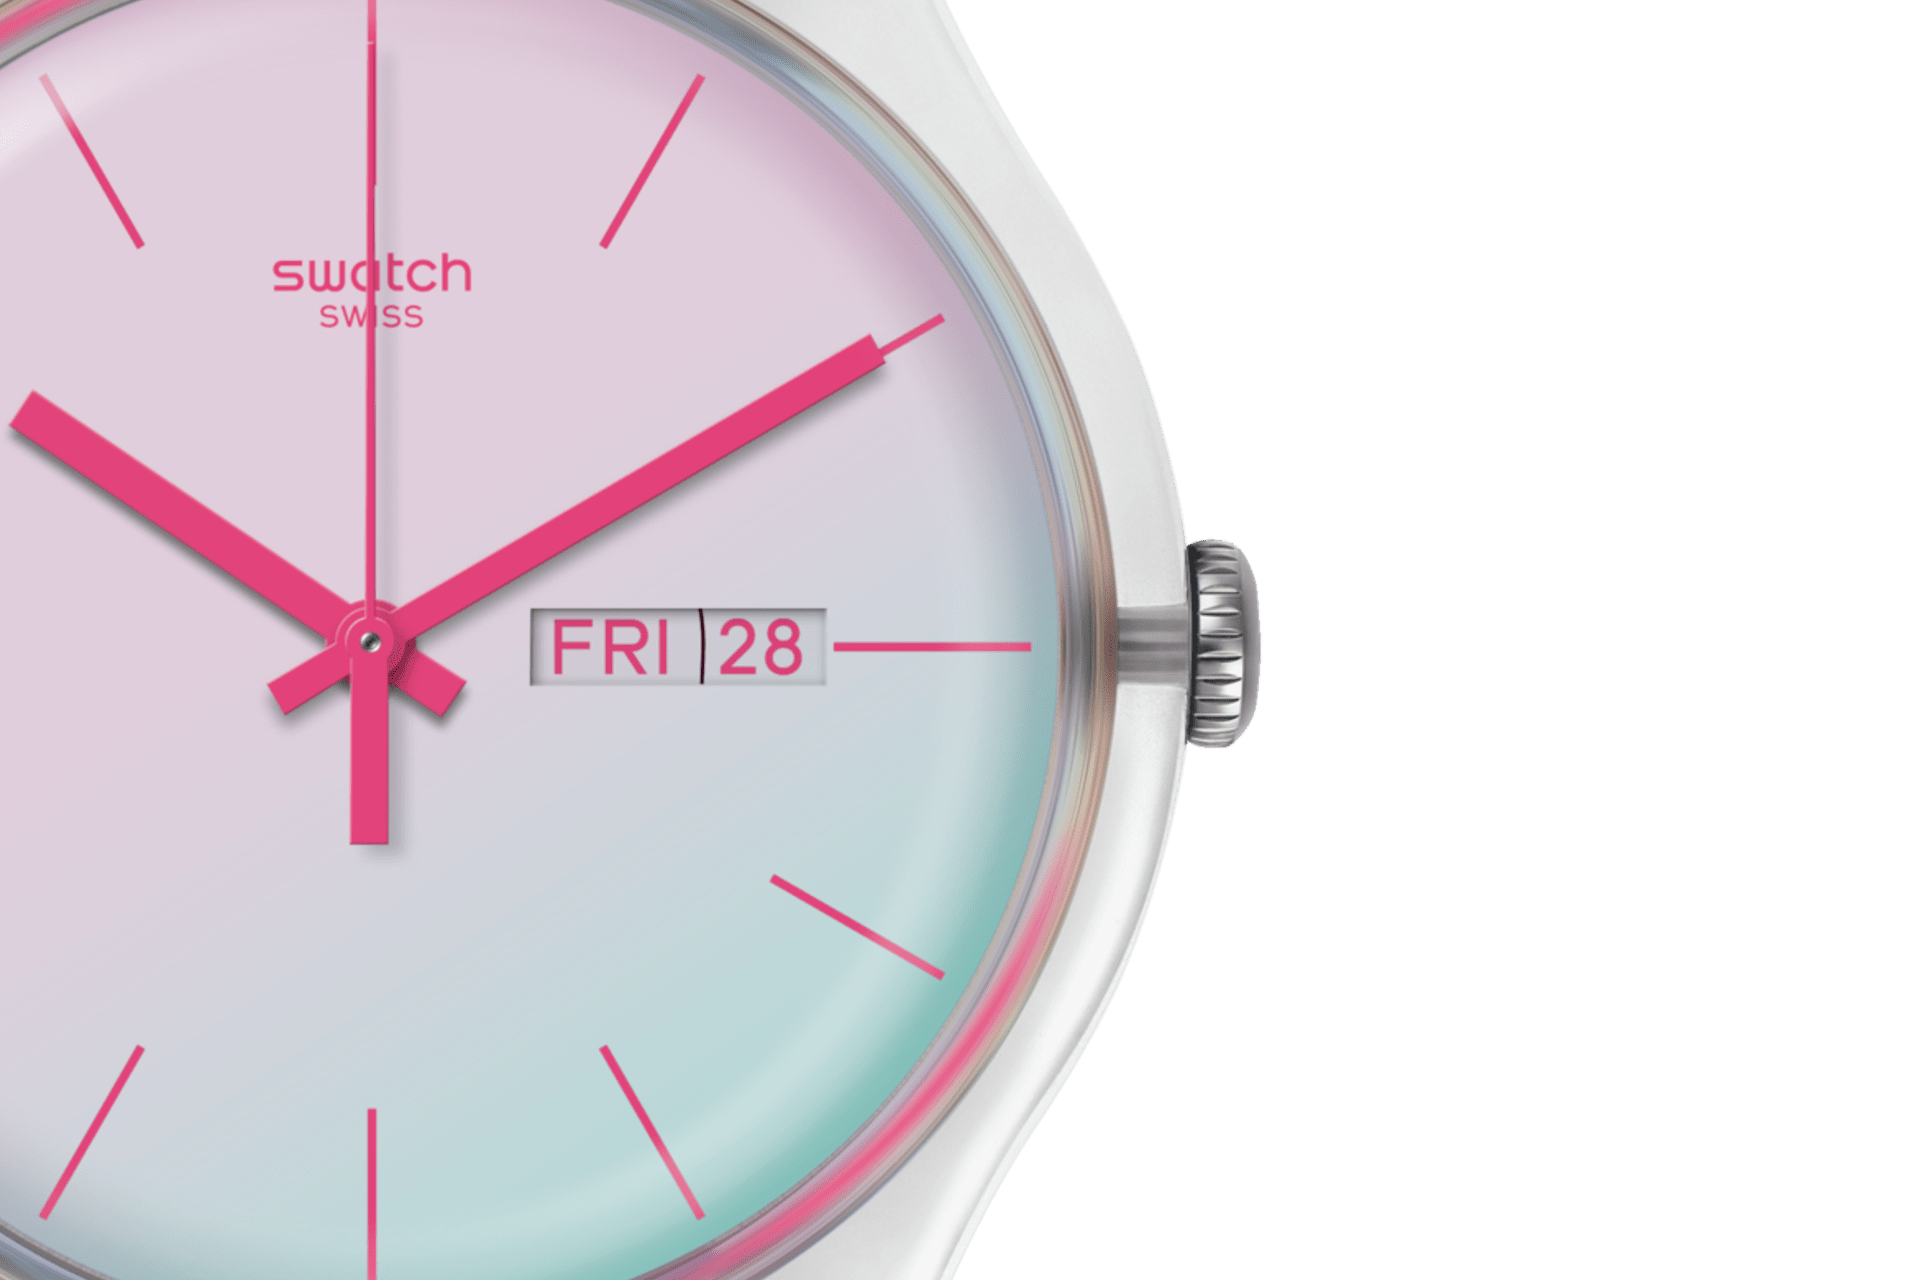 Reloj Swatch Mujer Polarwhite Suok713 con Ofertas en Carrefour